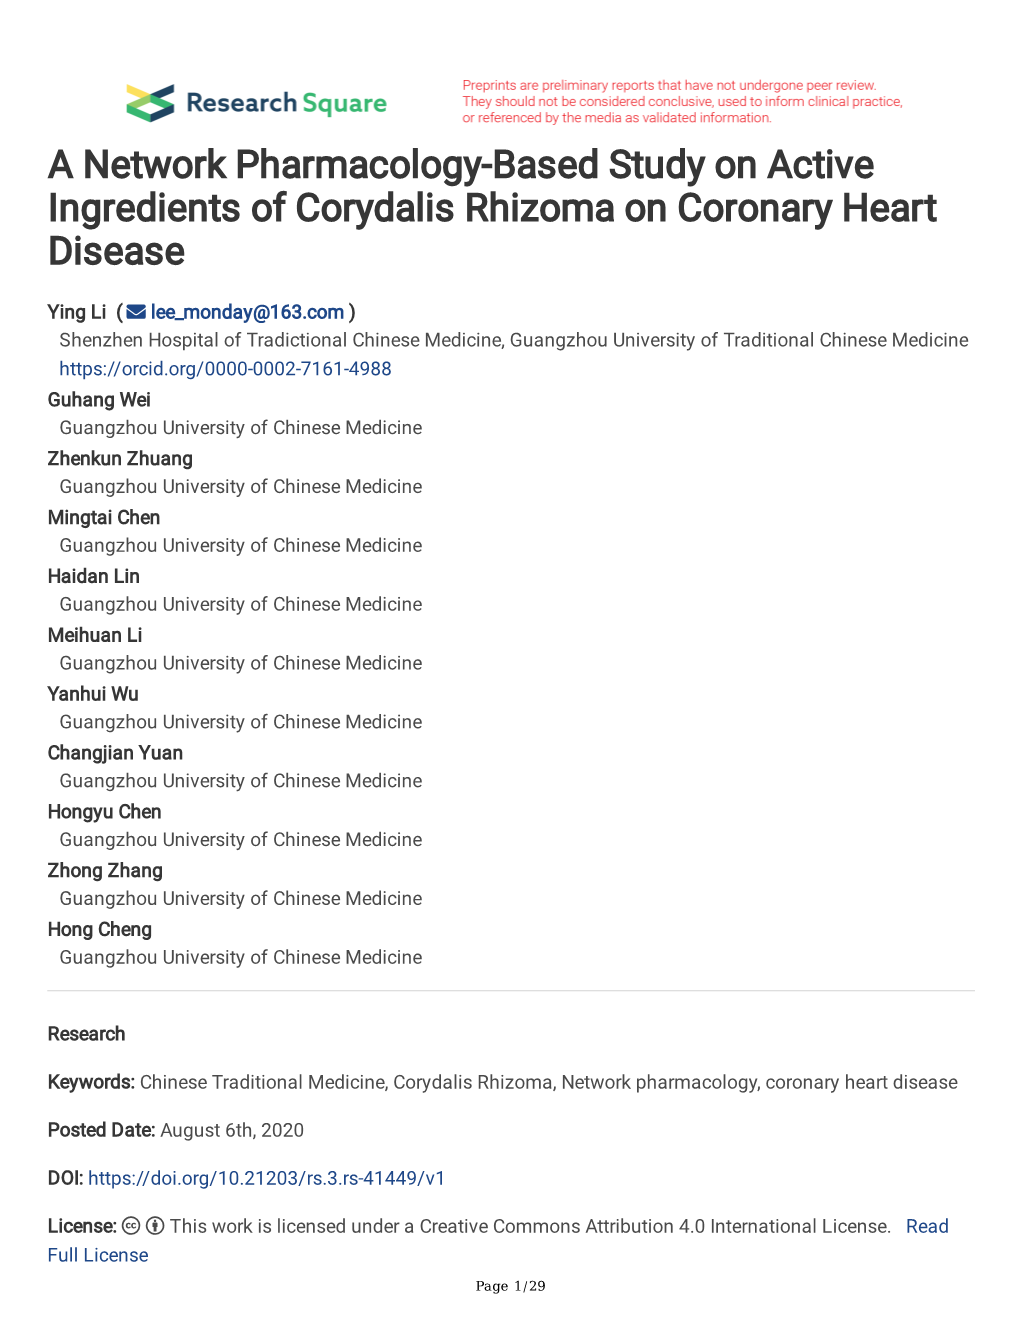 A Network Pharmacology-Based Study on Active Ingredients of Corydalis Rhizoma on Coronary Heart Disease